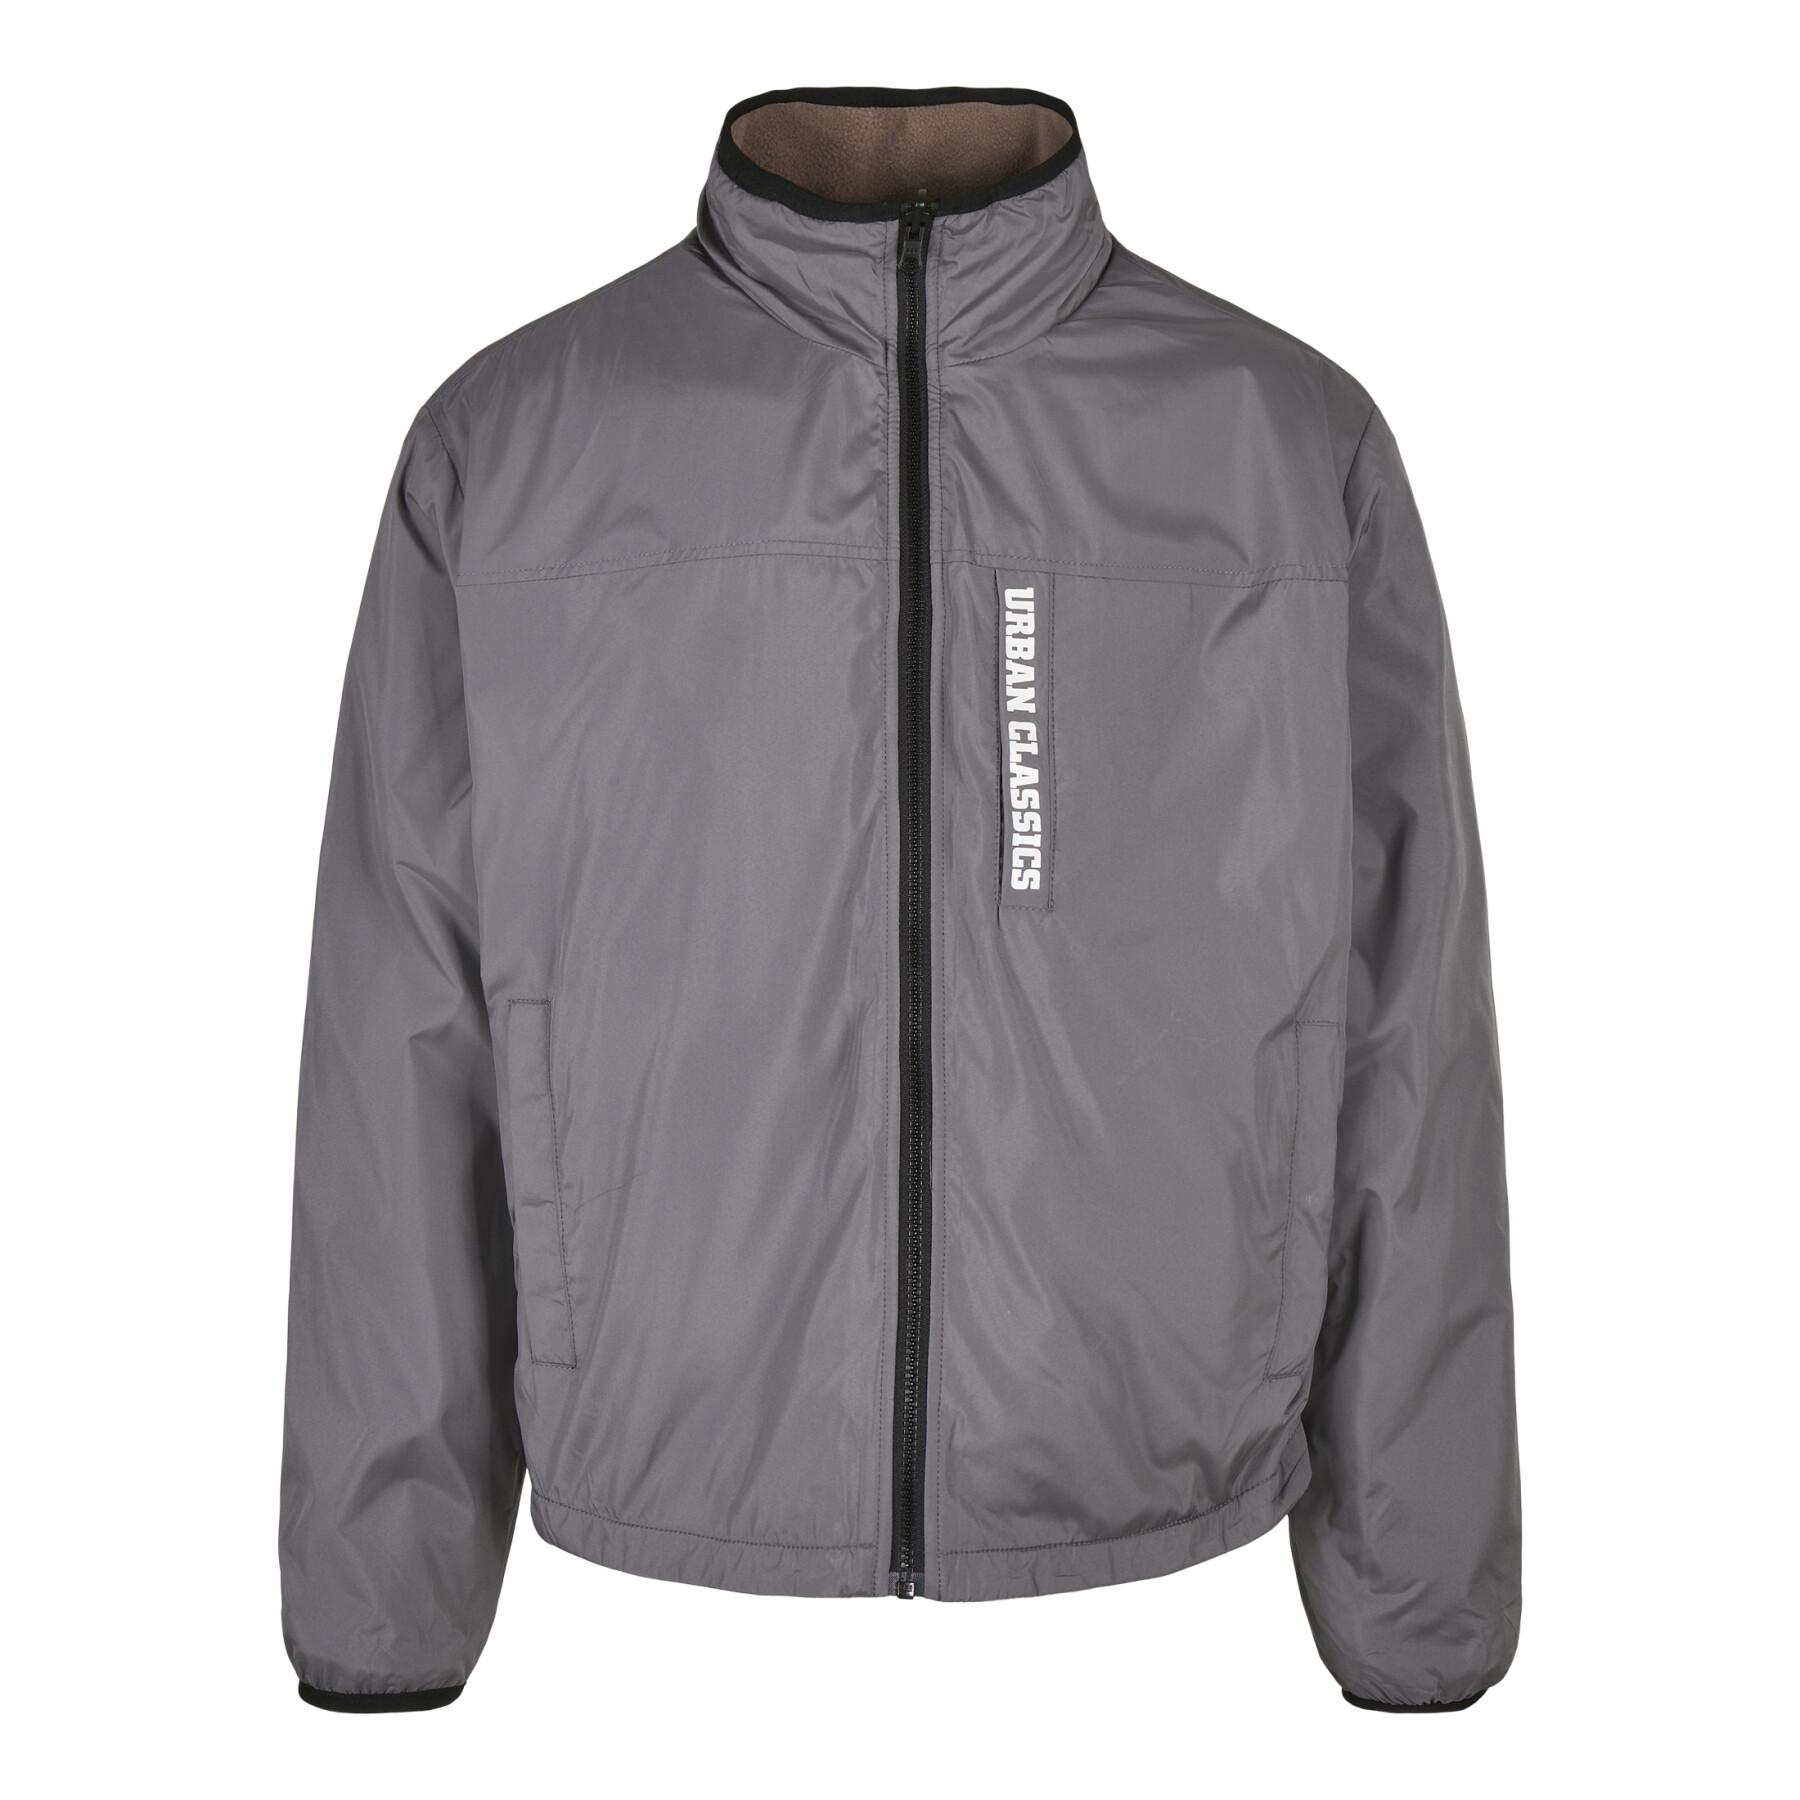 Reversible fleece jacket Urban Classics starter